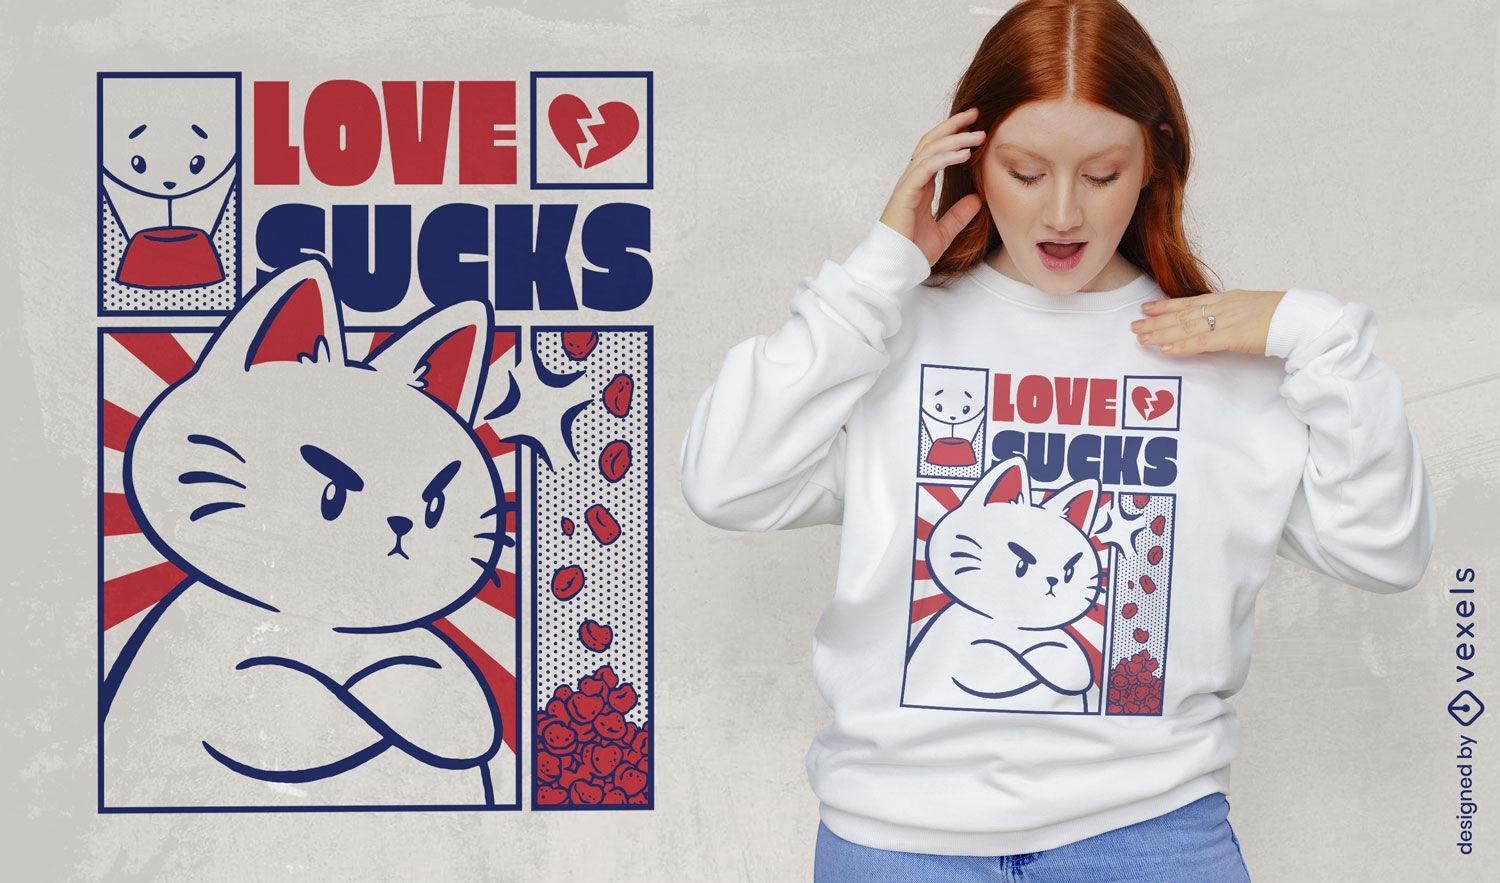 Ver?rgerte Katze Anti-Valentinstag-T-Shirt-Design